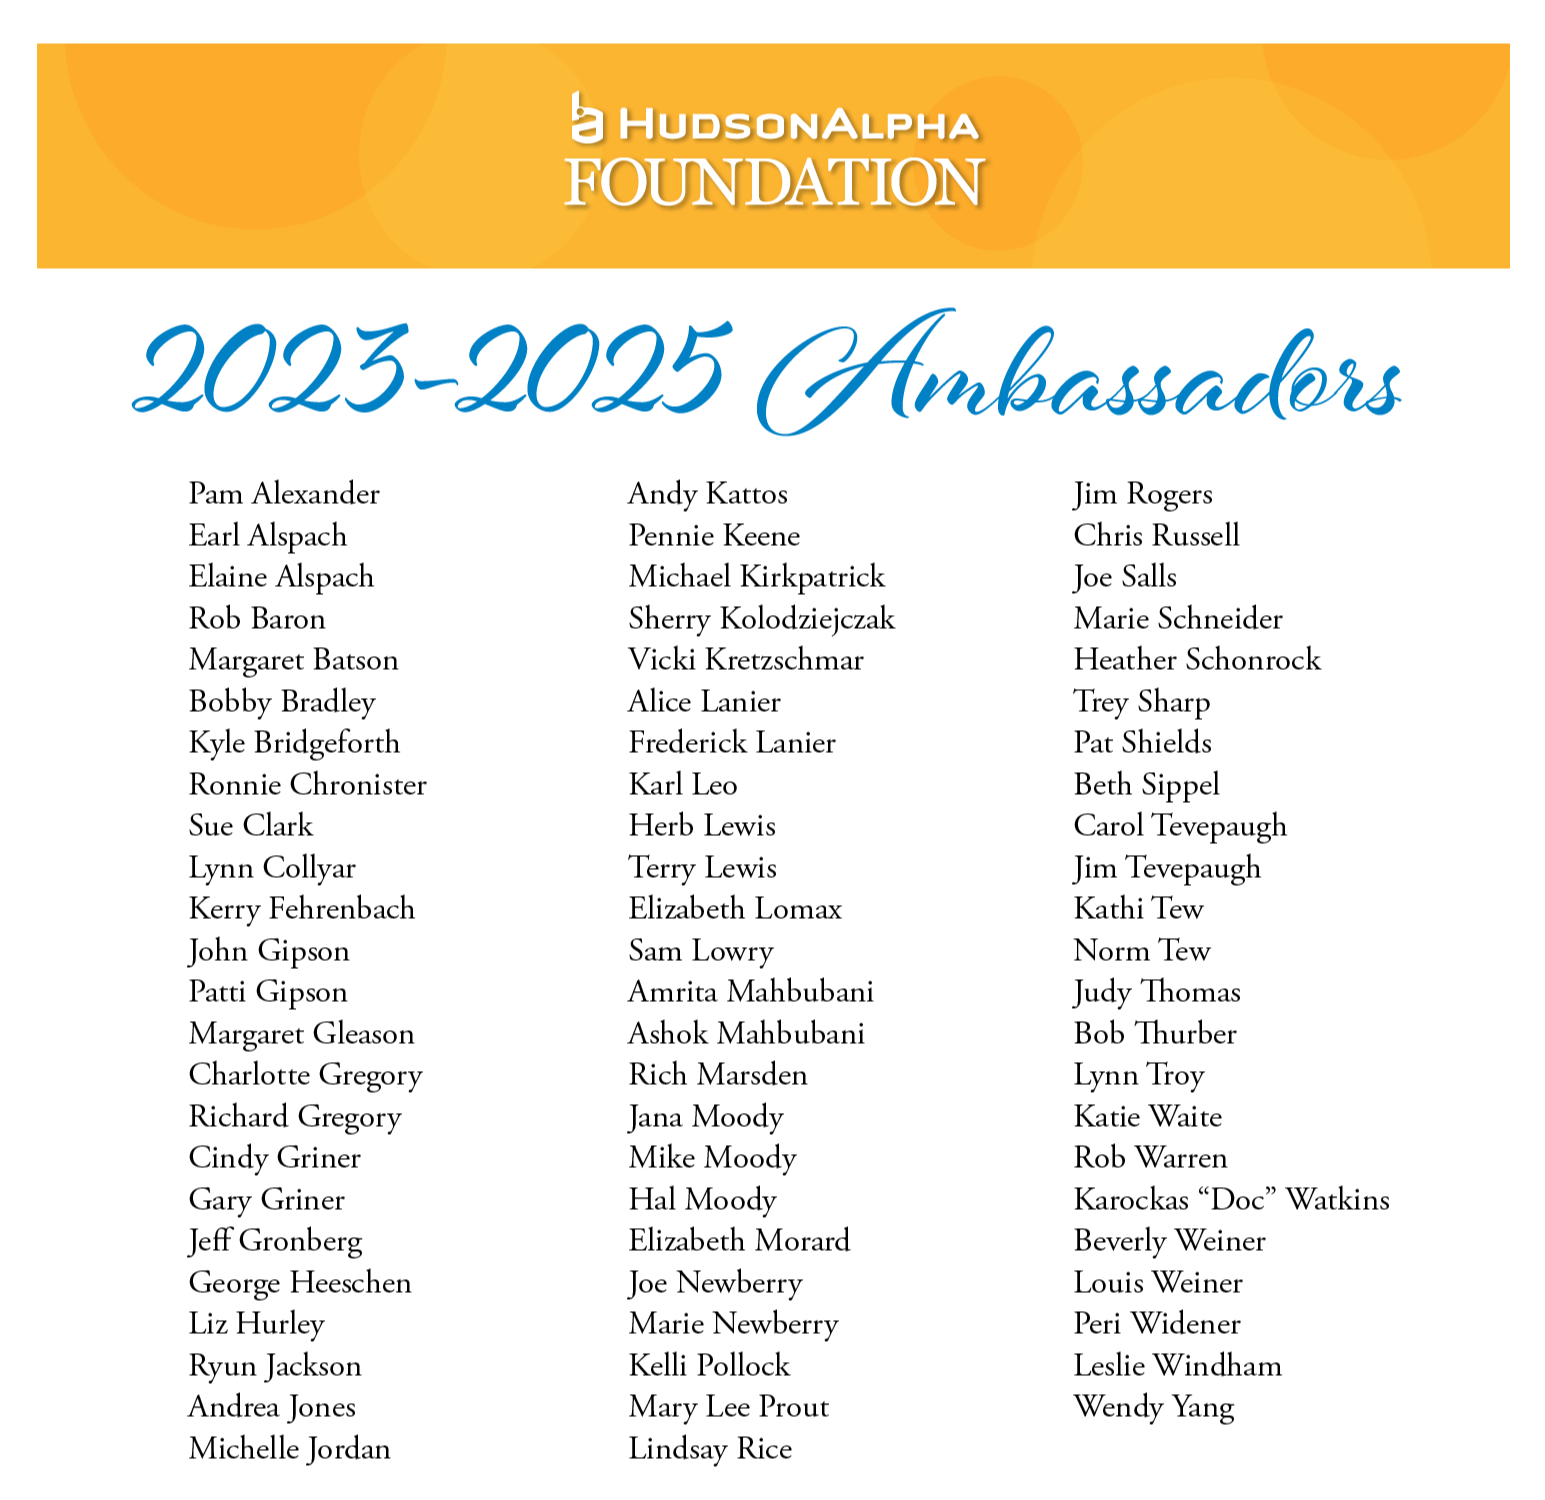 2023 -2025 HudsonAlpha Foundation Ambassadors